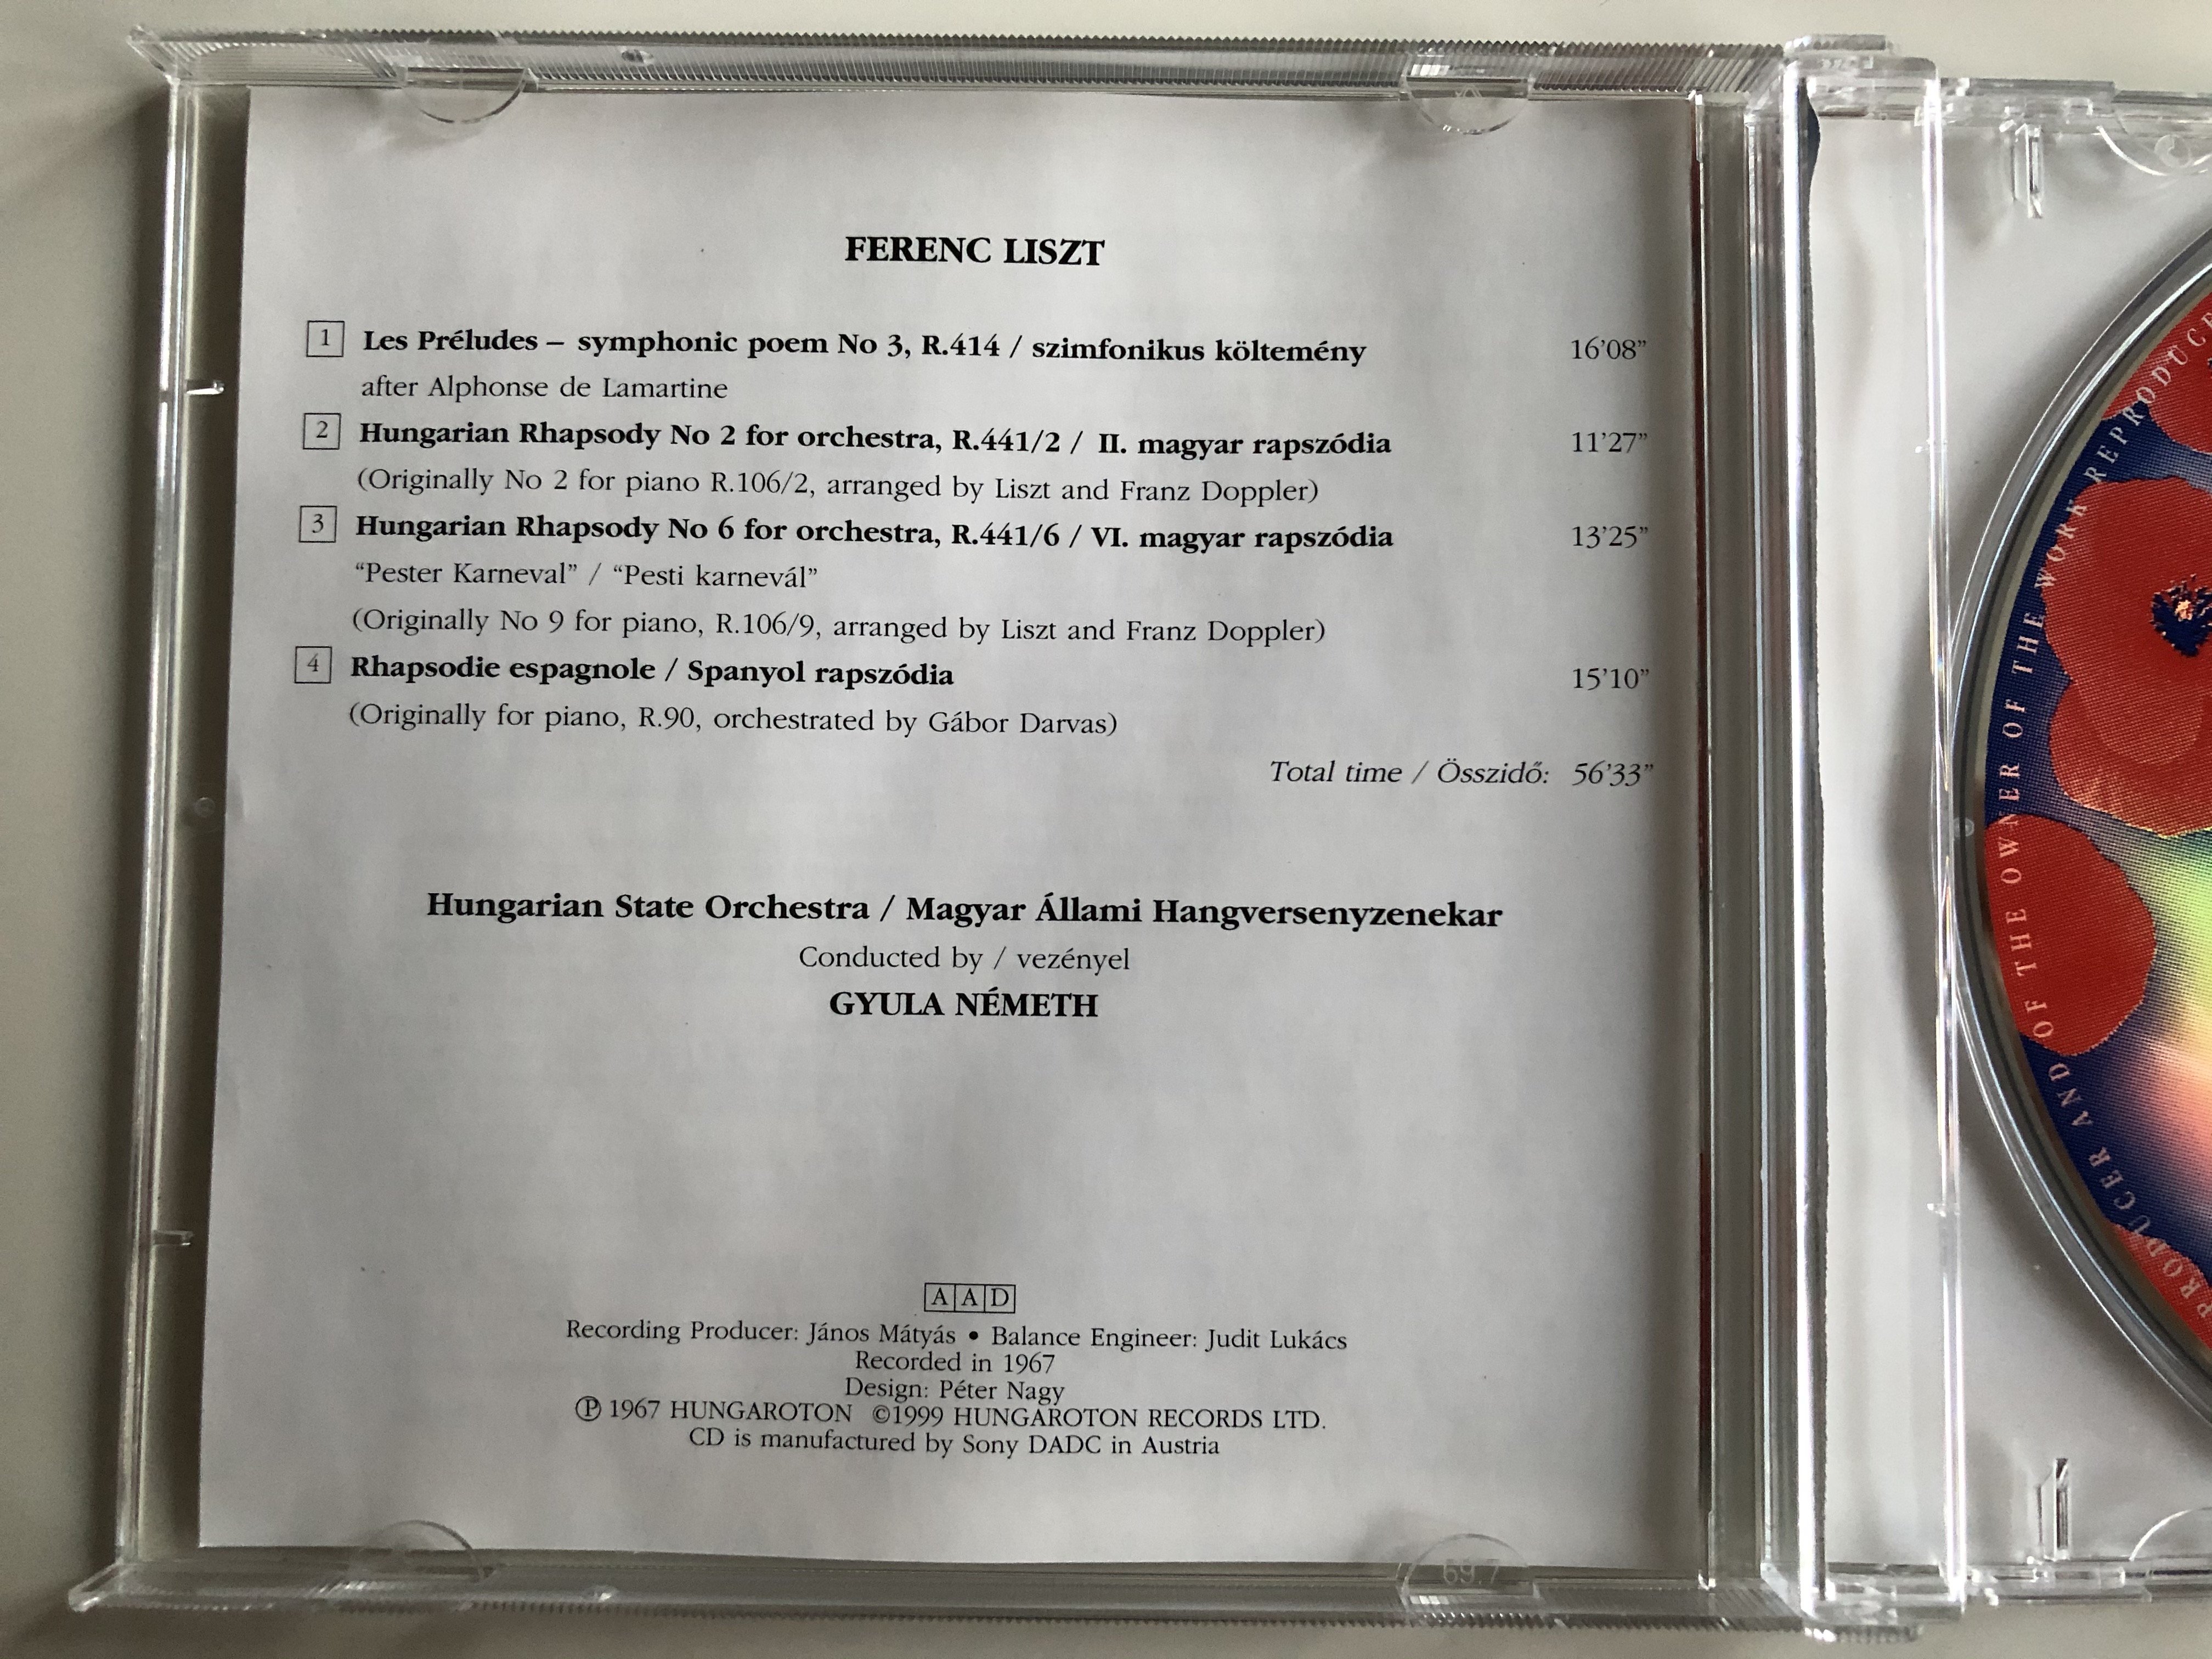 liszt-les-preludes-hungarian-rhapsodies-nos-2-6-rhapsodie-espagnole-hungarian-state-orchestra-gyula-nemeth-hungaroton-classic-audio-cd-1967-stereo-hrc-1026-2-.jpg